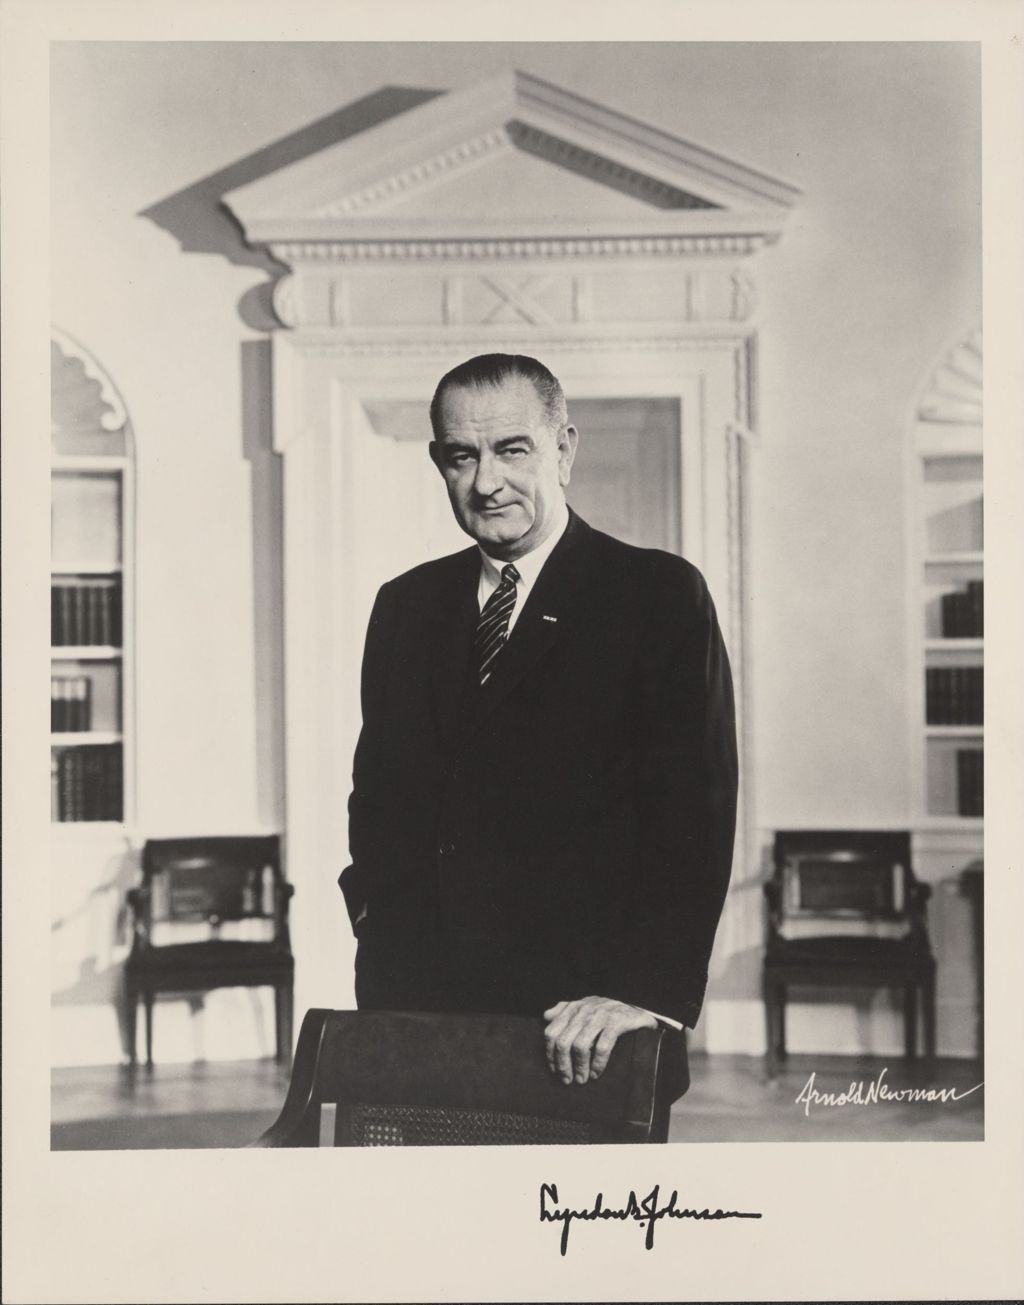 Miniature of Lyndon B. Johnson at the White House